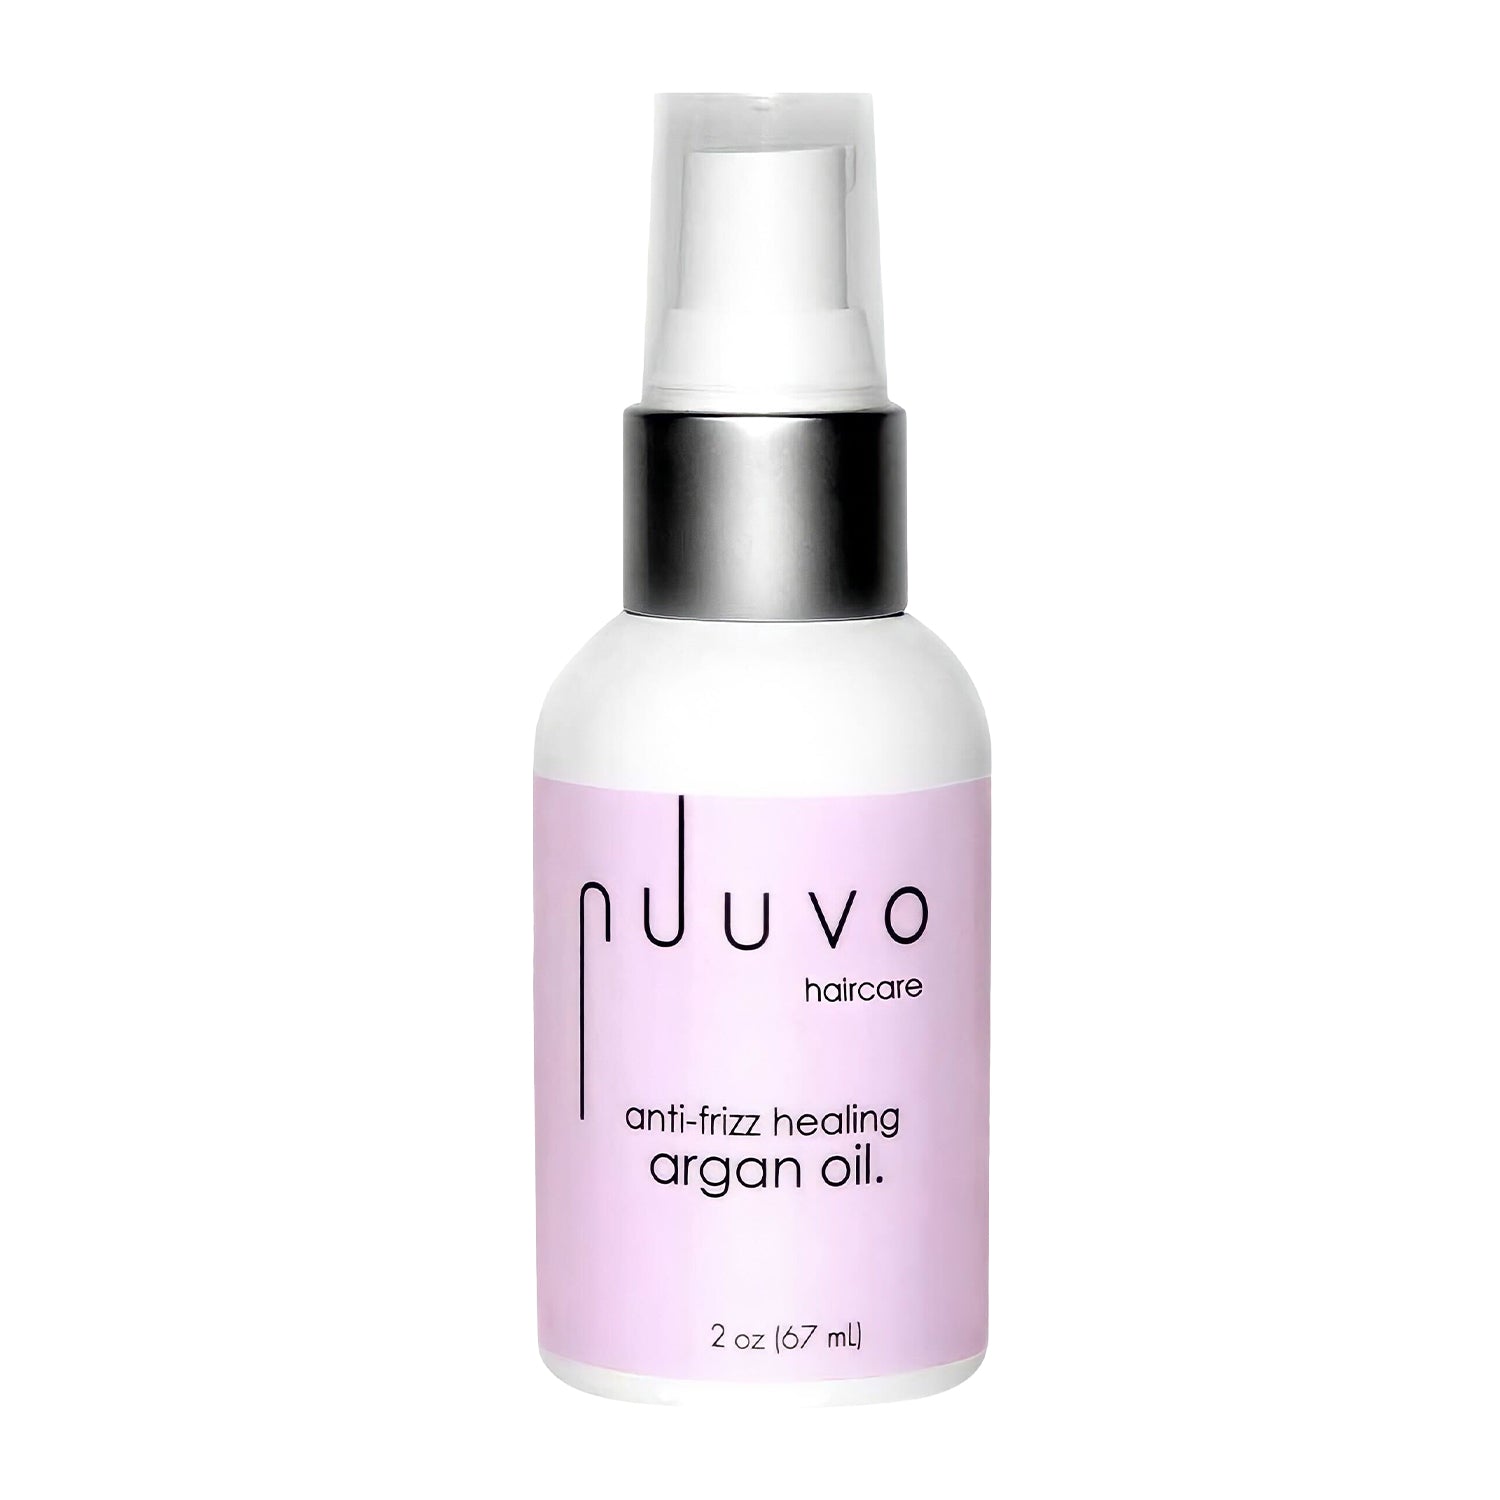 Nuuvo Haircare Lightweight Anti Frizz Healing Argan Oil